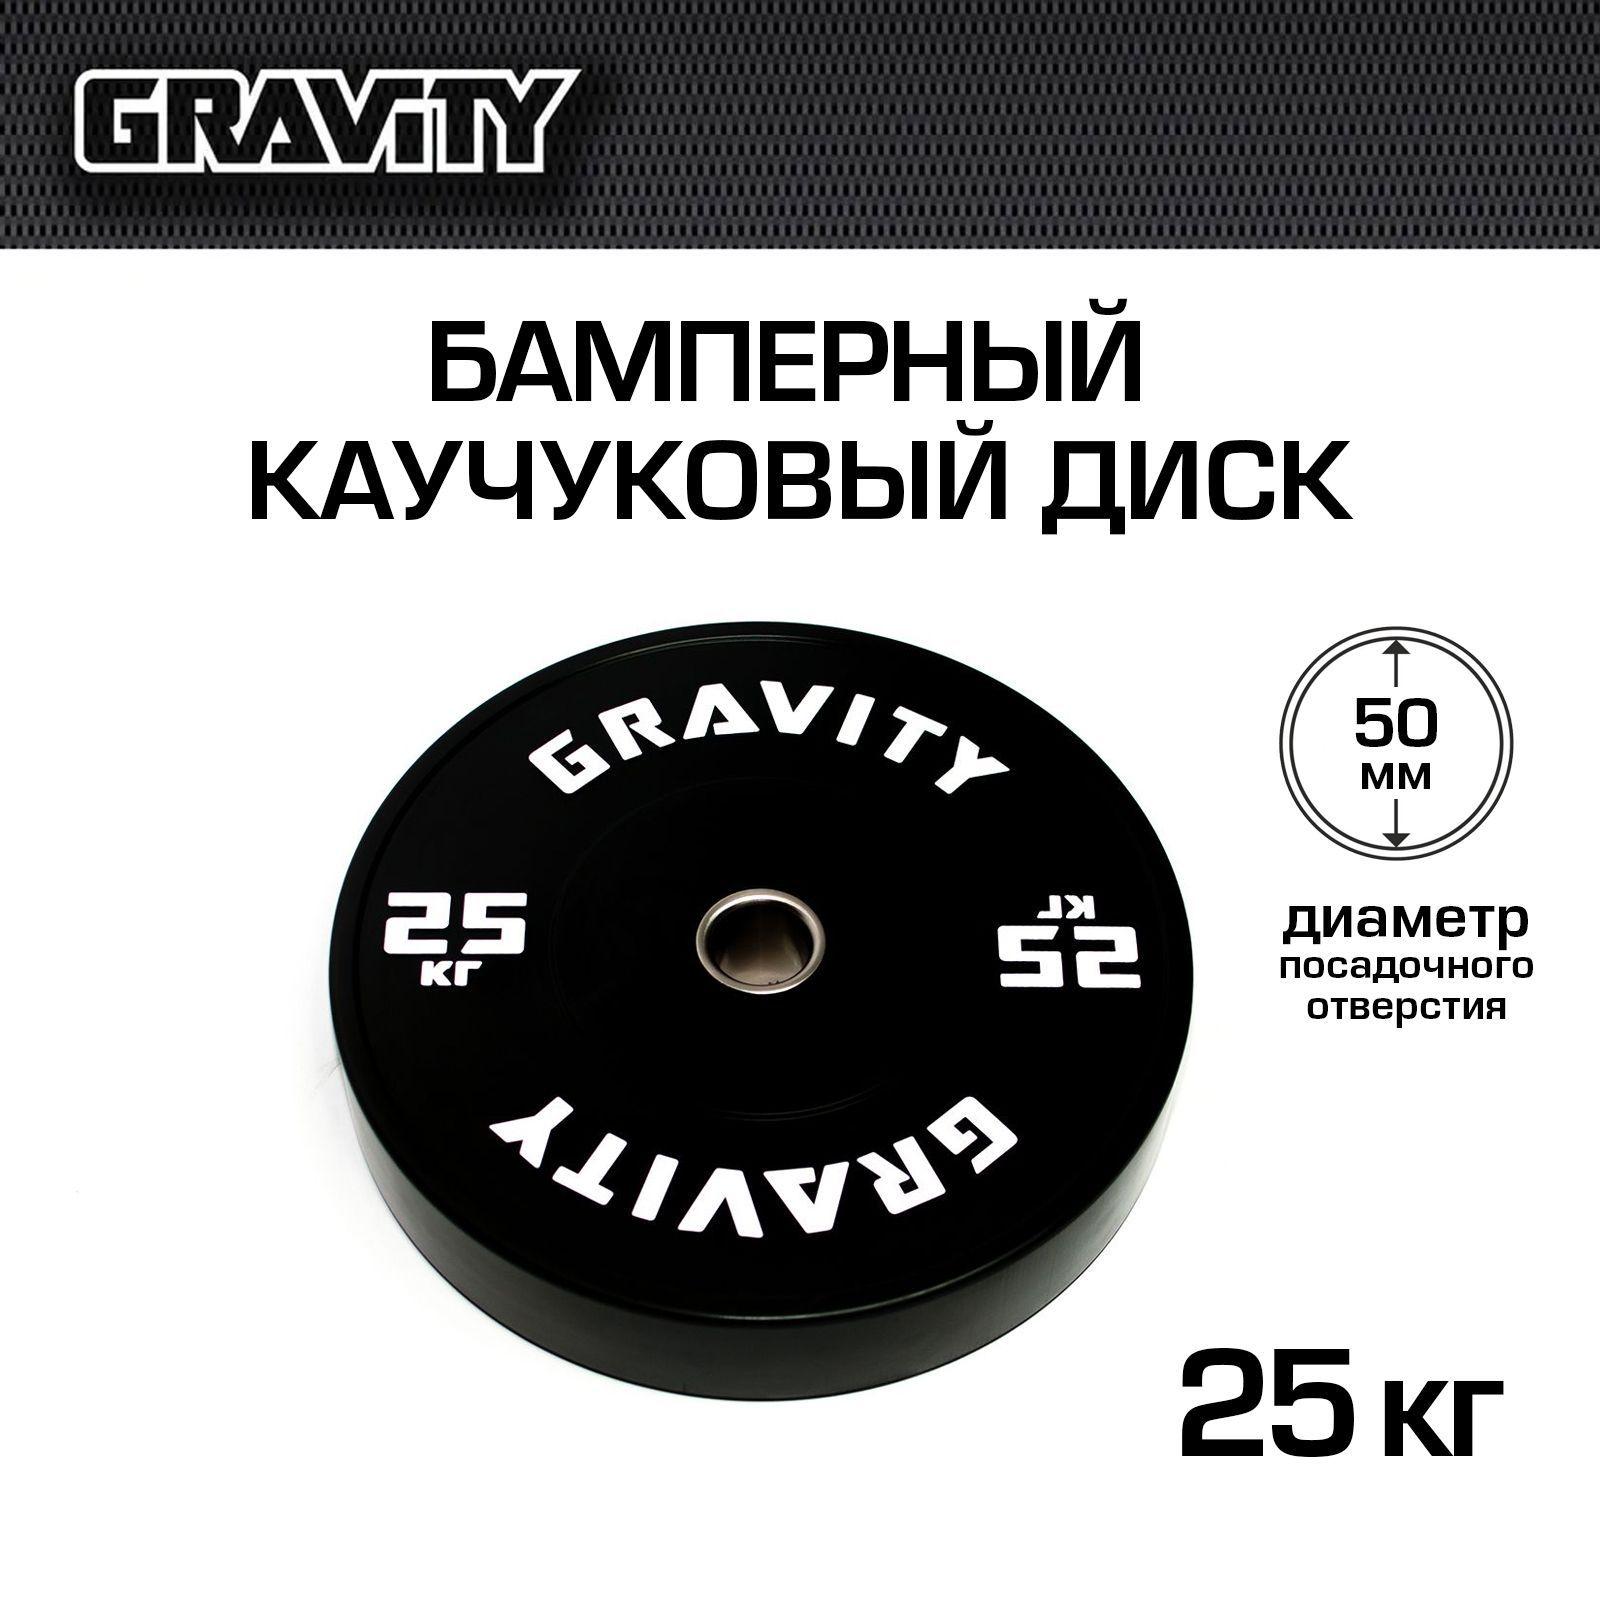 Gravity | Бамперный каучуковый диск Gravity, черный, белый лого, 25кг